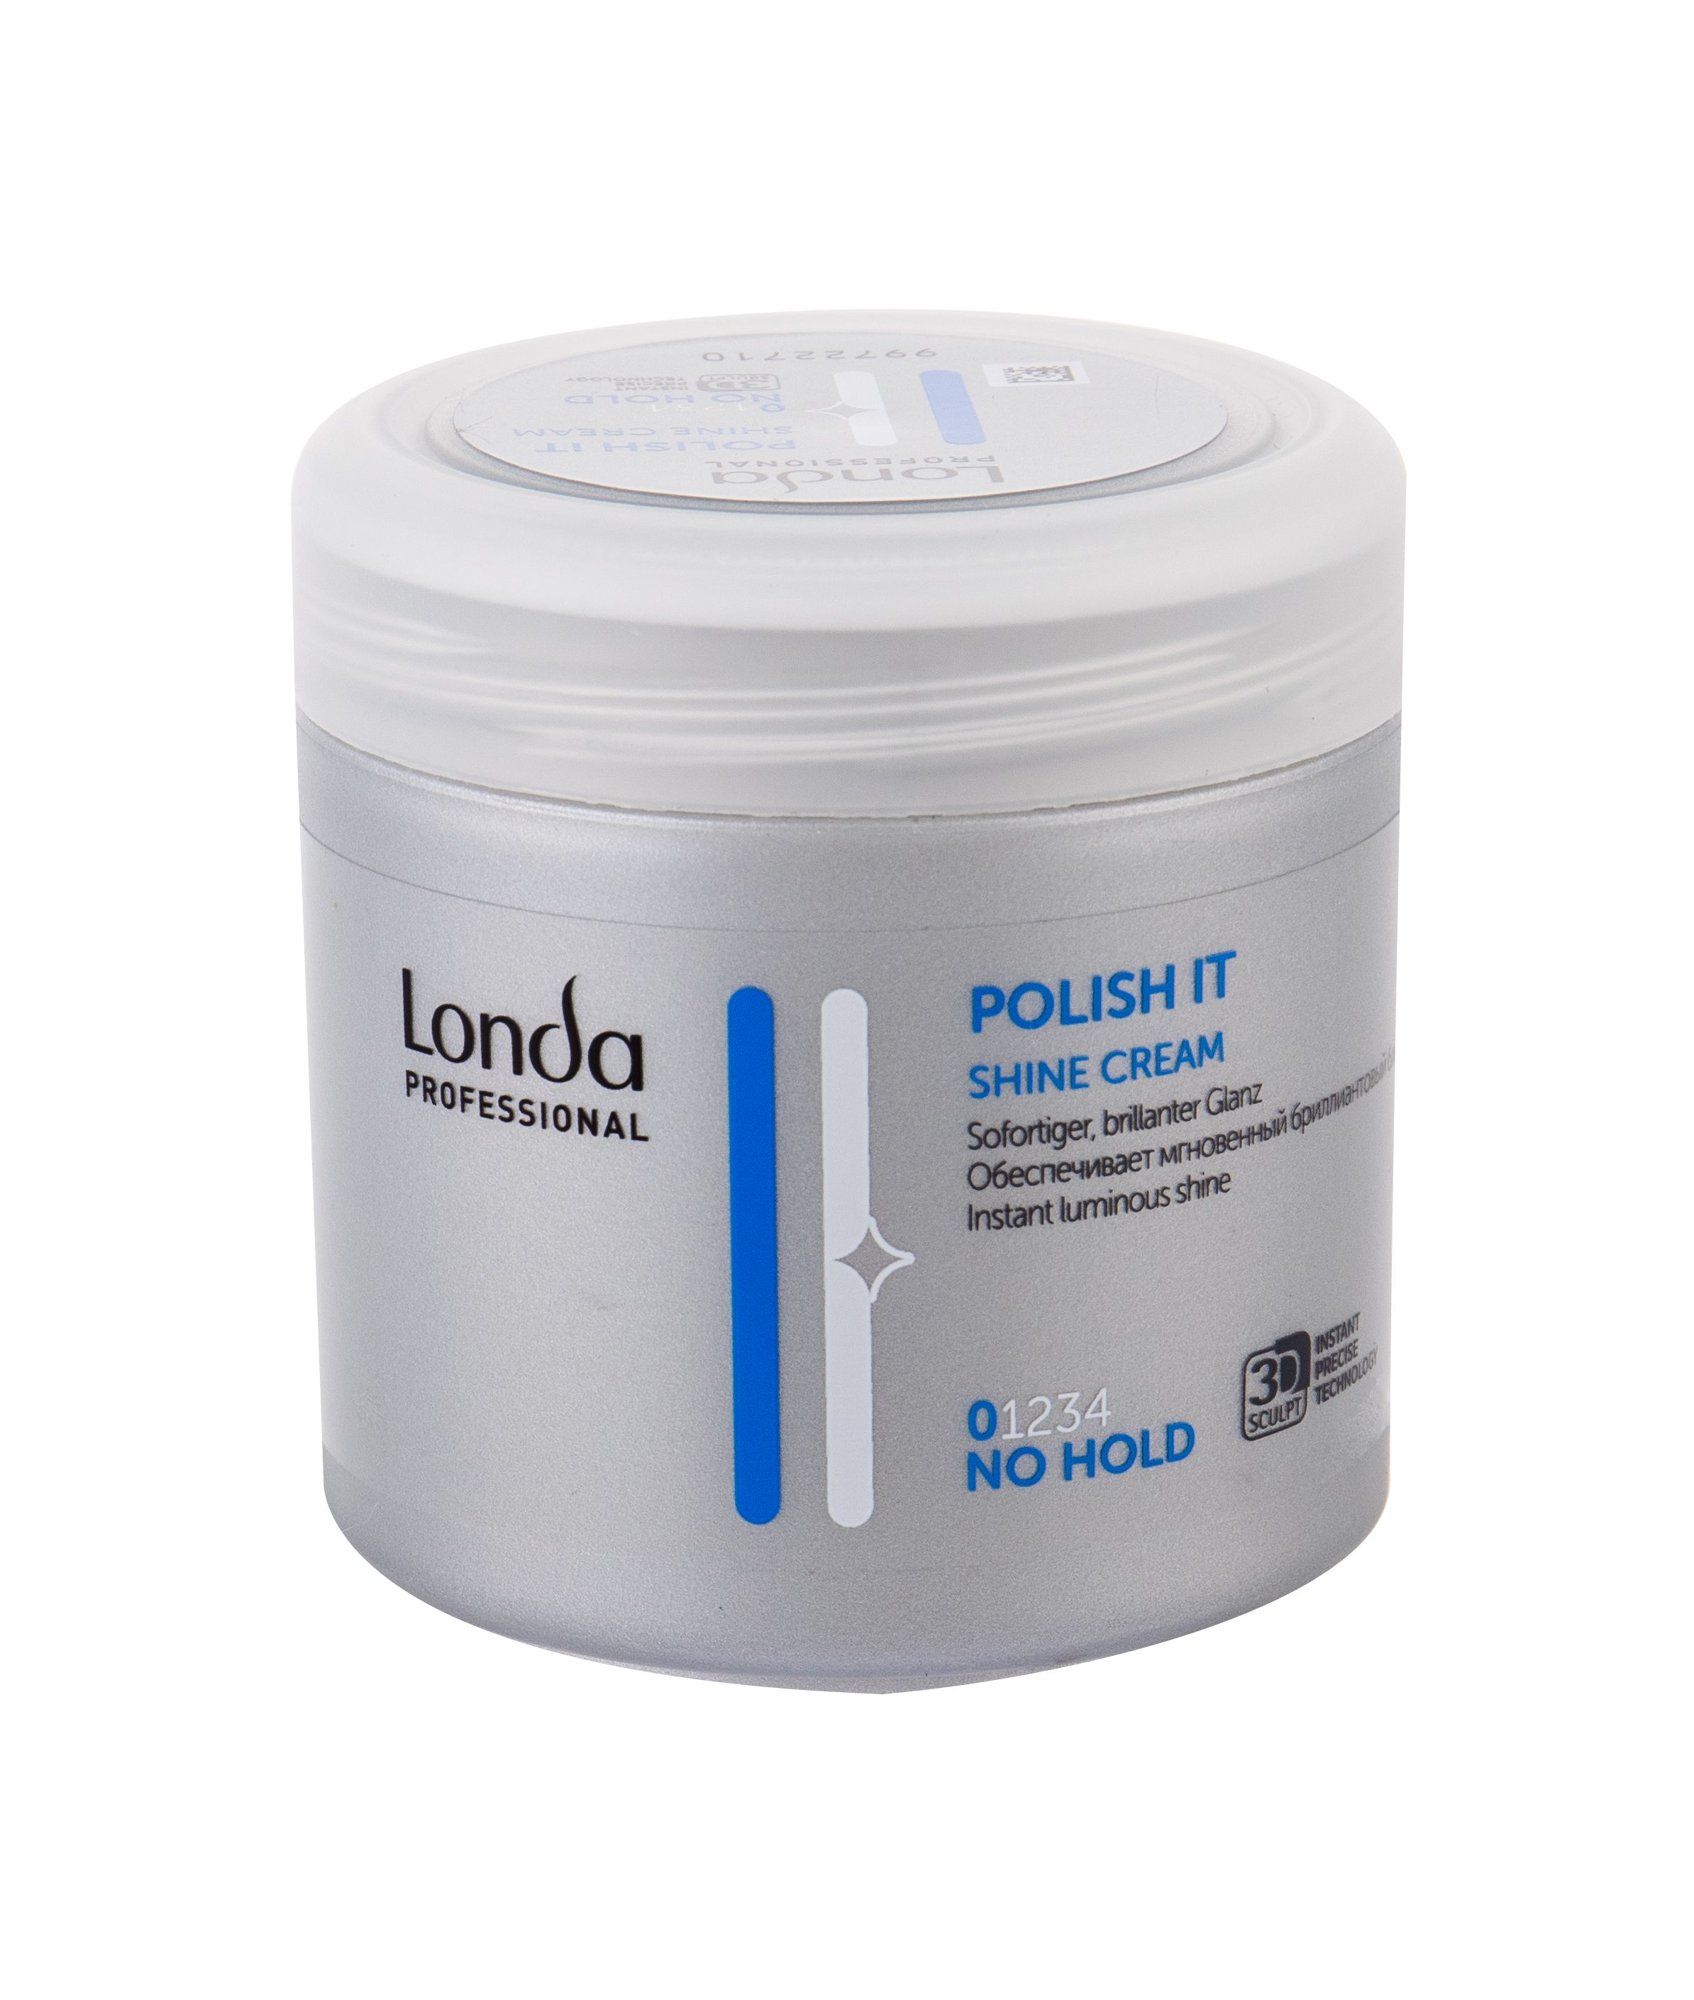 Londa Professional Polish It Shine Cream